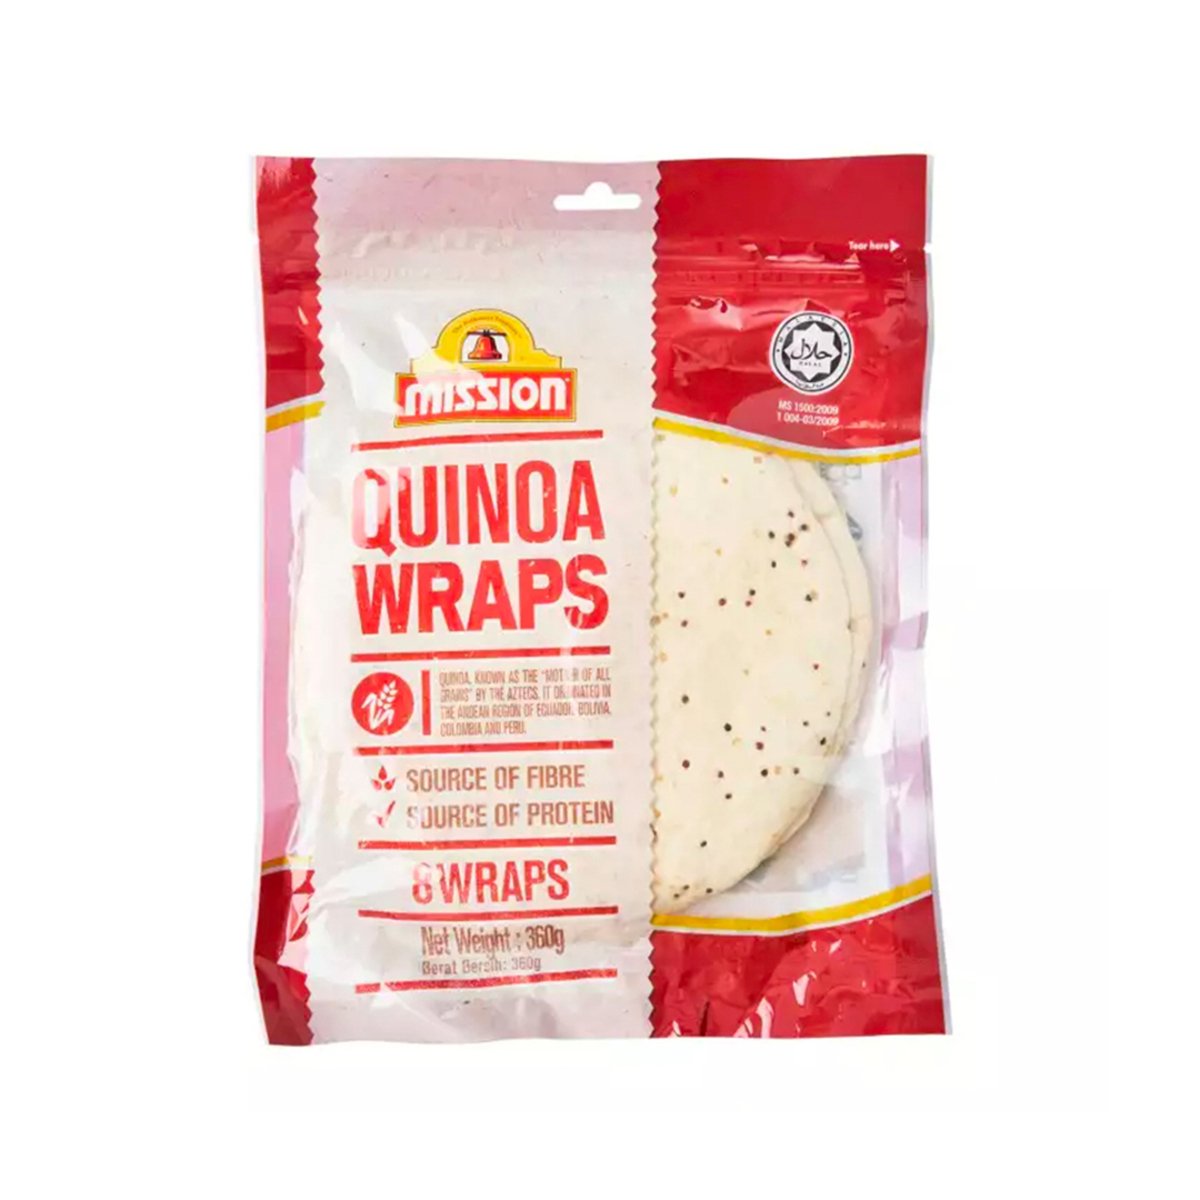 Mission Wrap Quinoa 8pcs